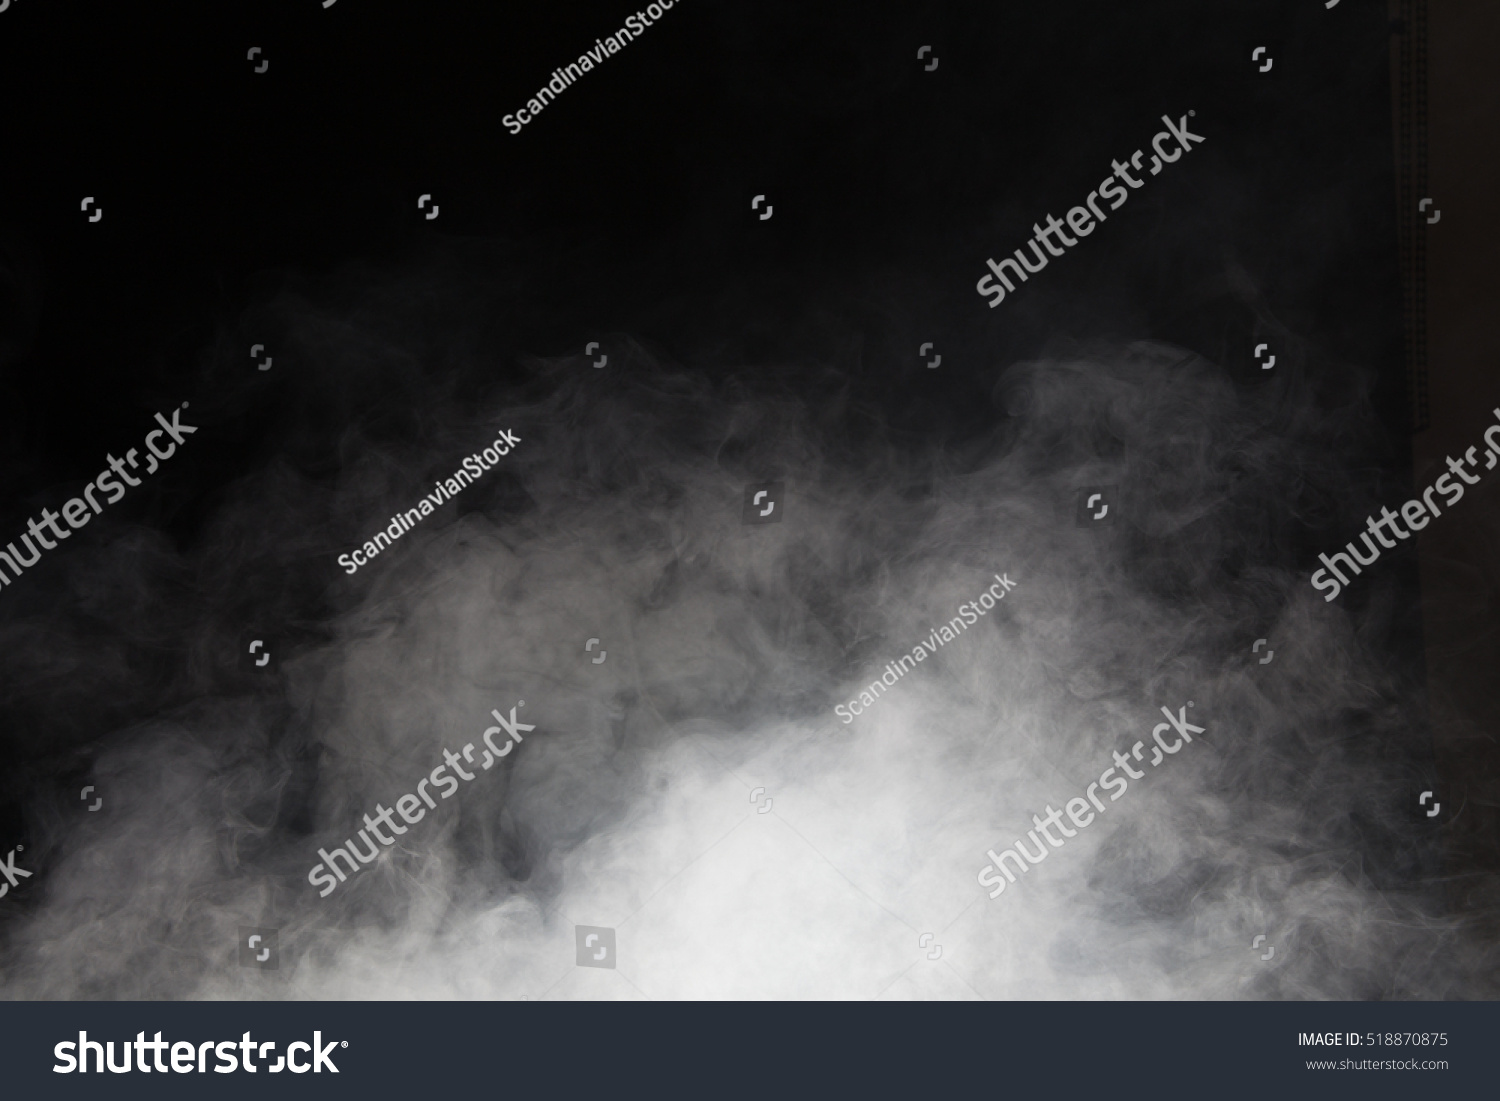 Smoke on black background #518870875